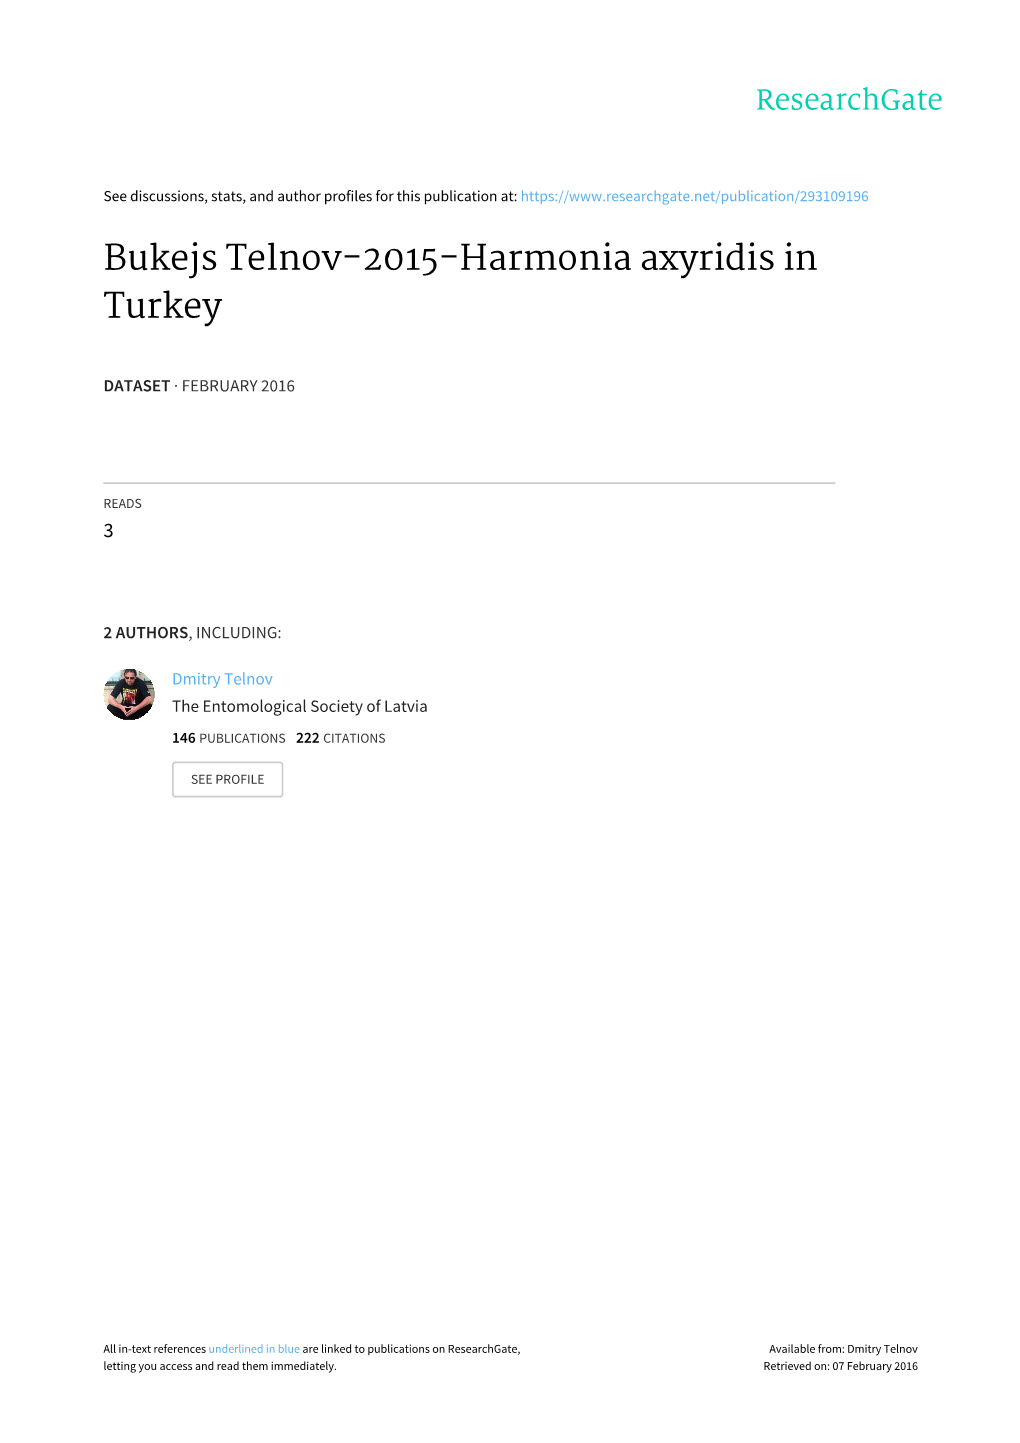 Bukejs Telnov-2015-Harmonia Axyridis in Turkey